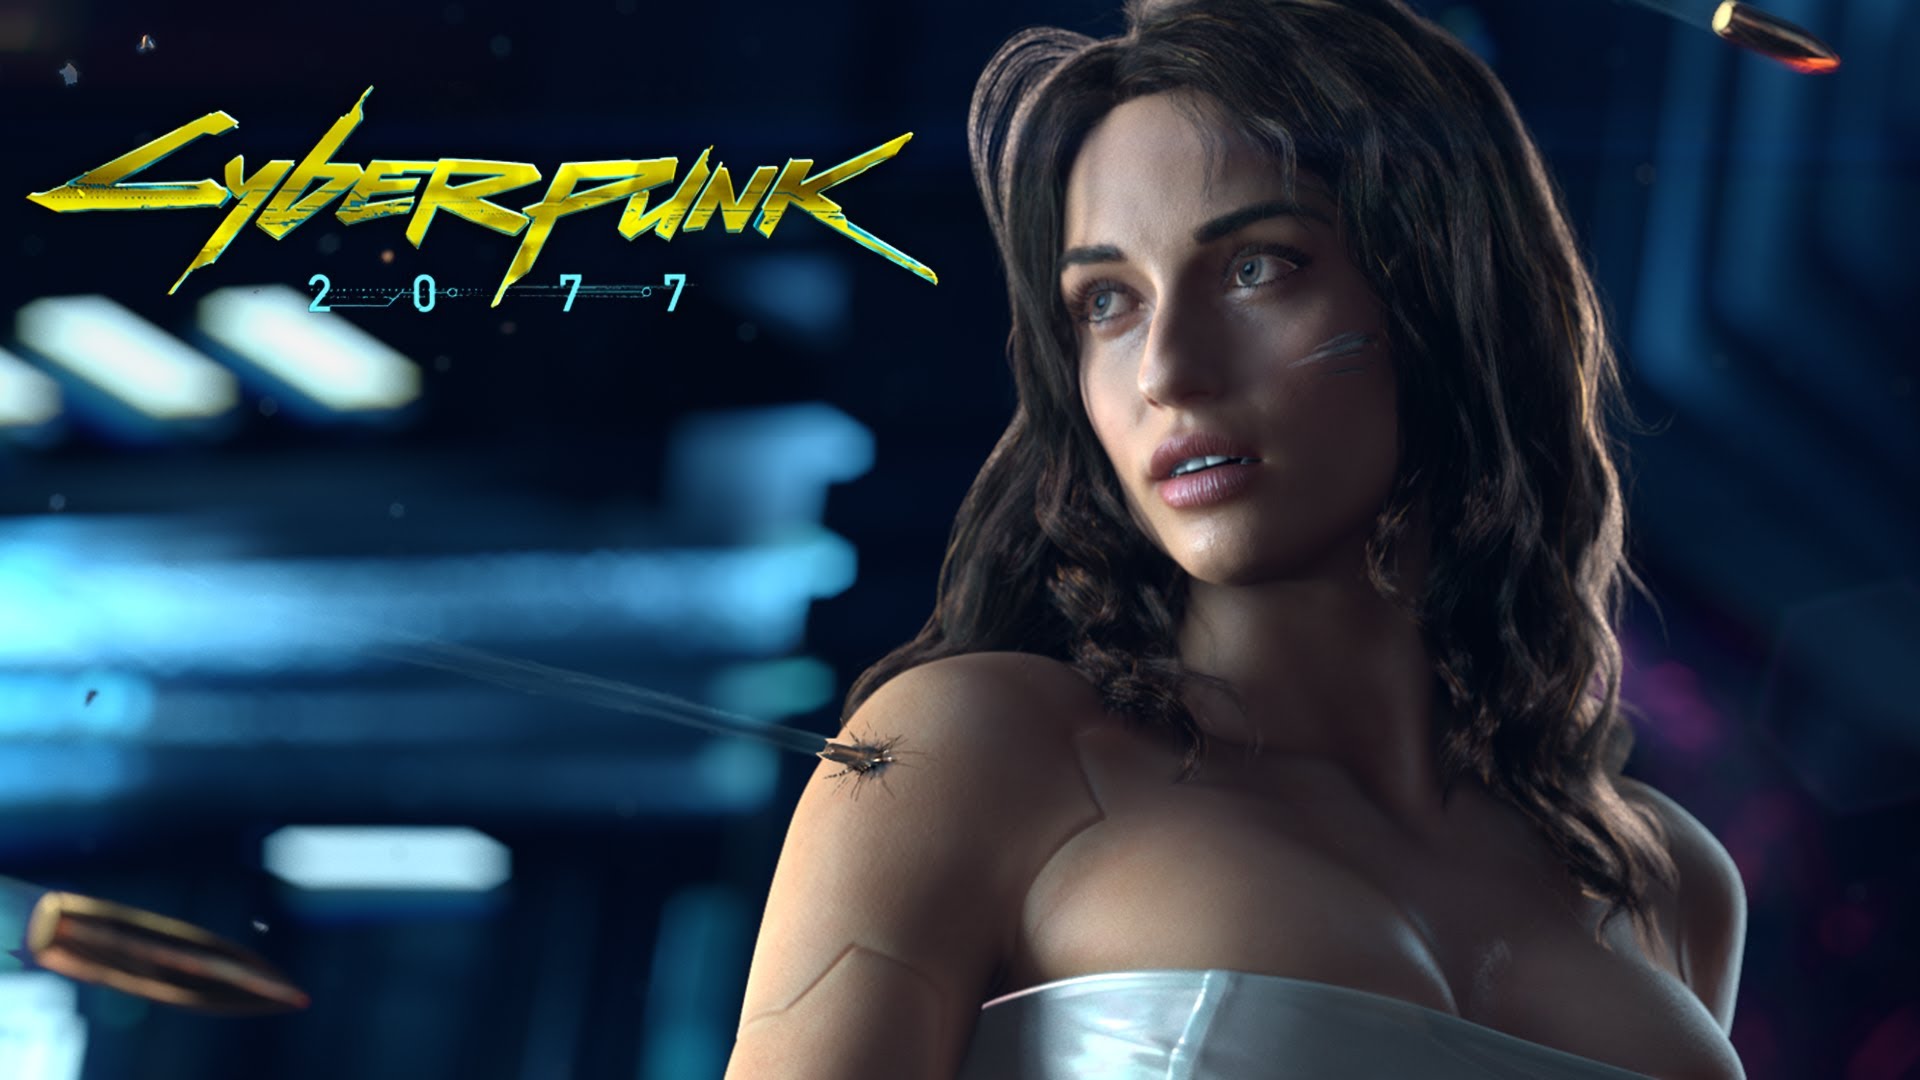 cyberpunk-2077-podria-salir-la-luz-e3-2018-frikigamers.com